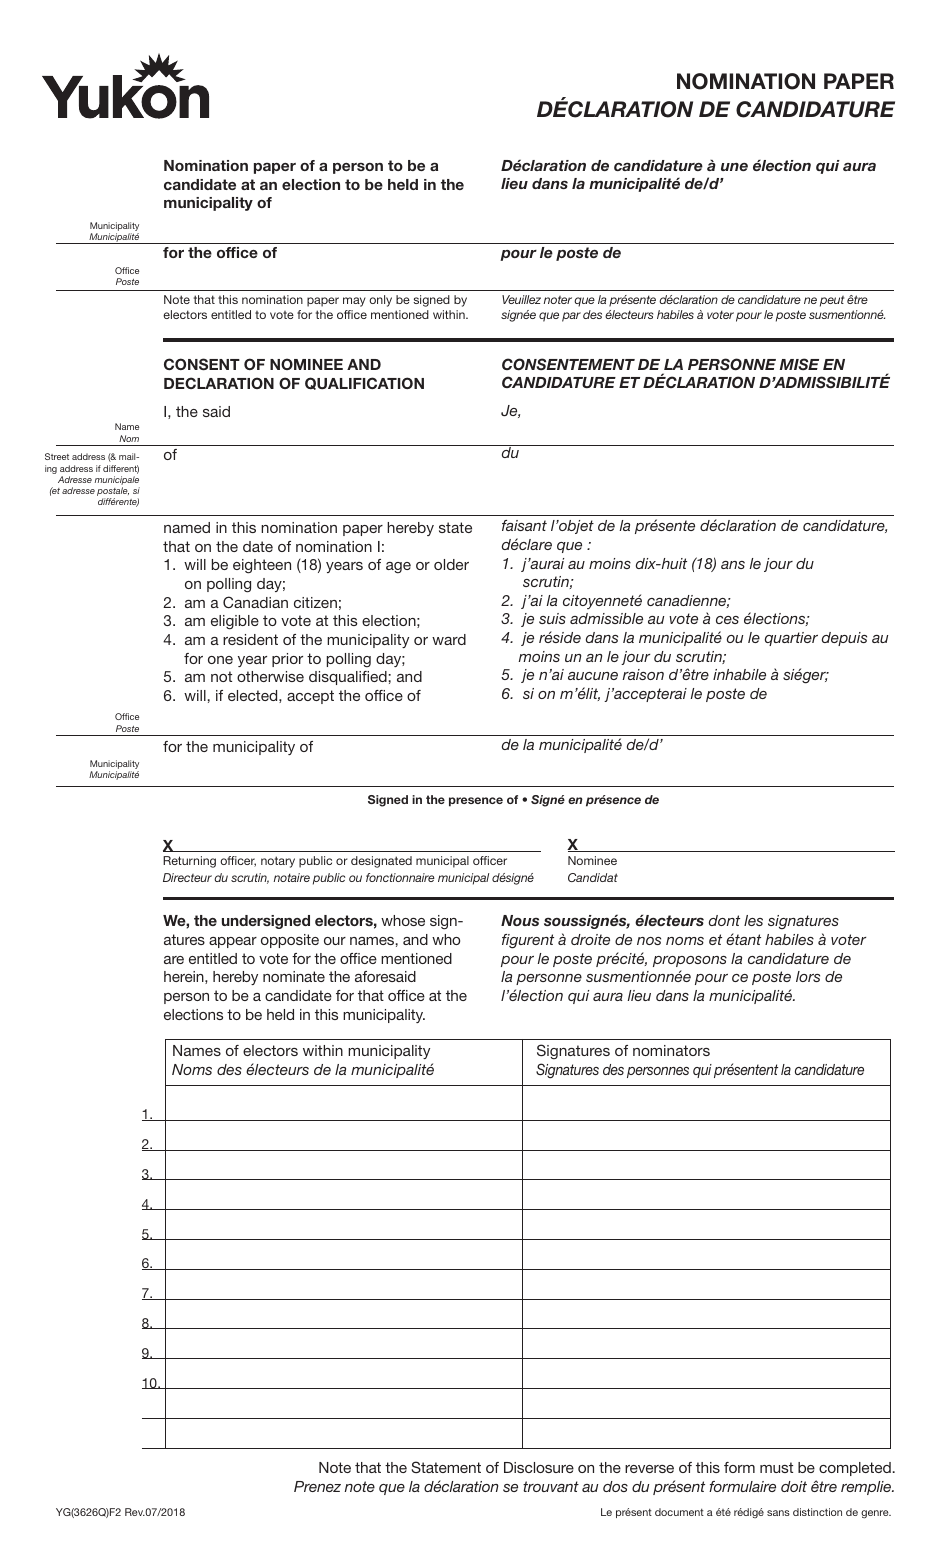 Form YG3626 Nomination Paper - Yukon, Canada (English / French), Page 1